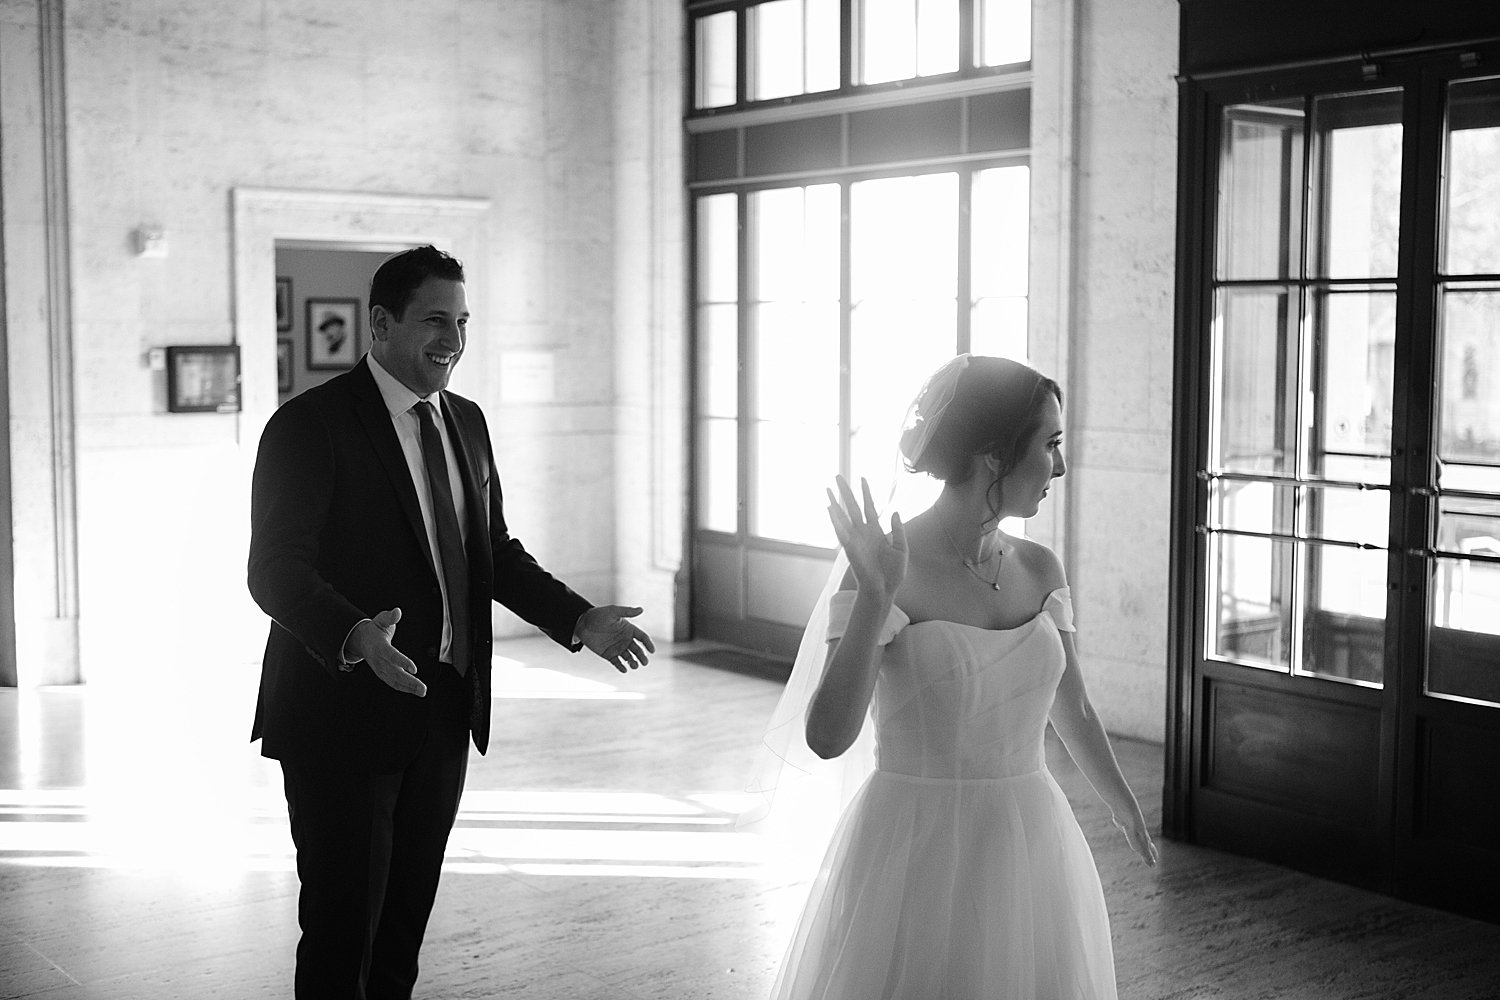 Chicago art musuem documentary wedding photographer  0021.jpg